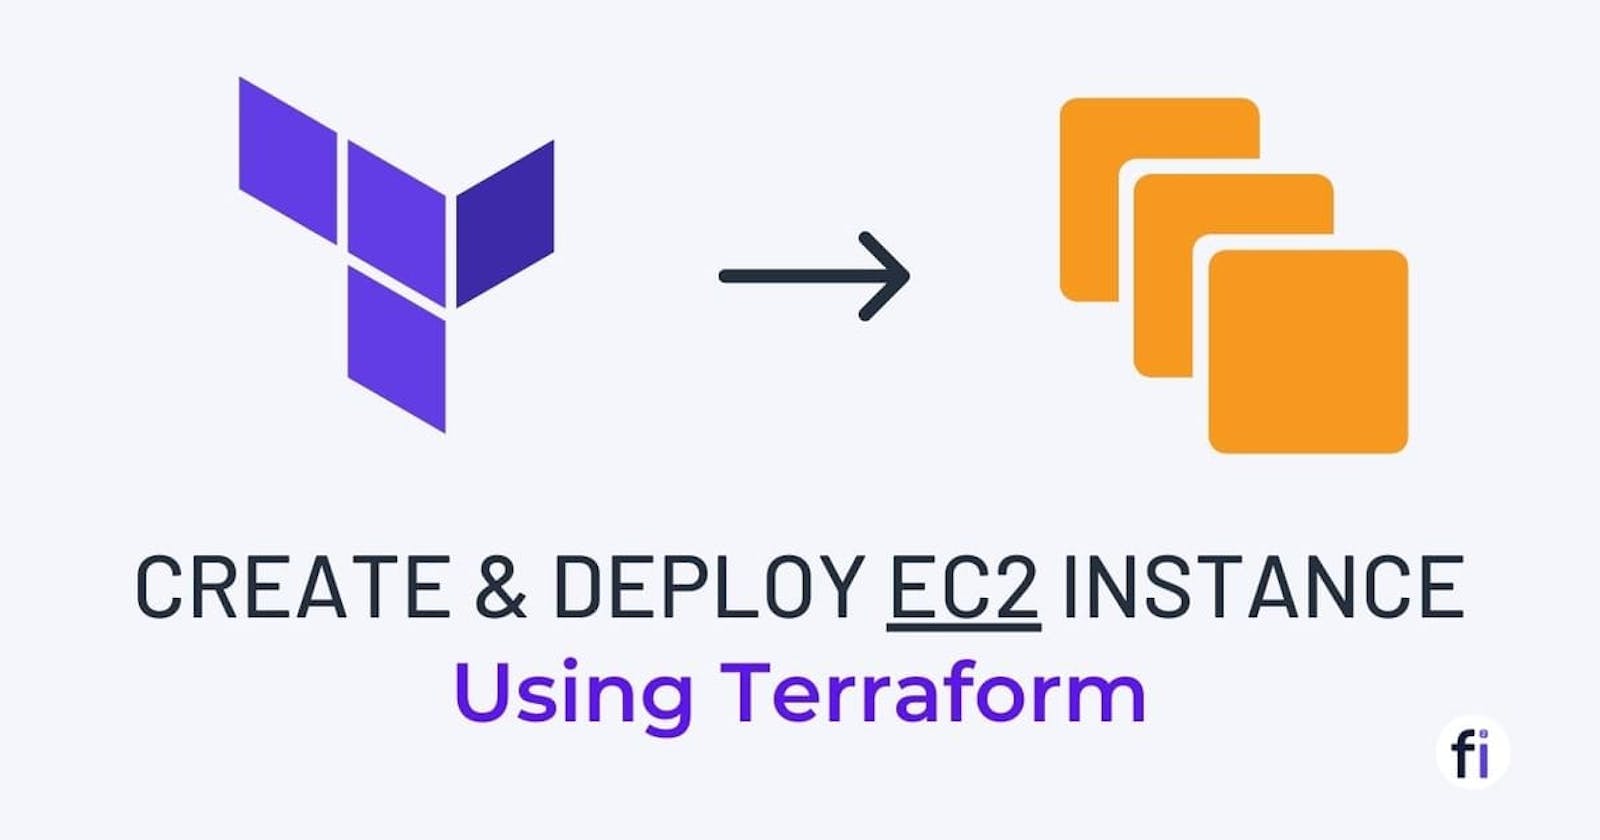 Deploy the Ec2 instances using Terraform